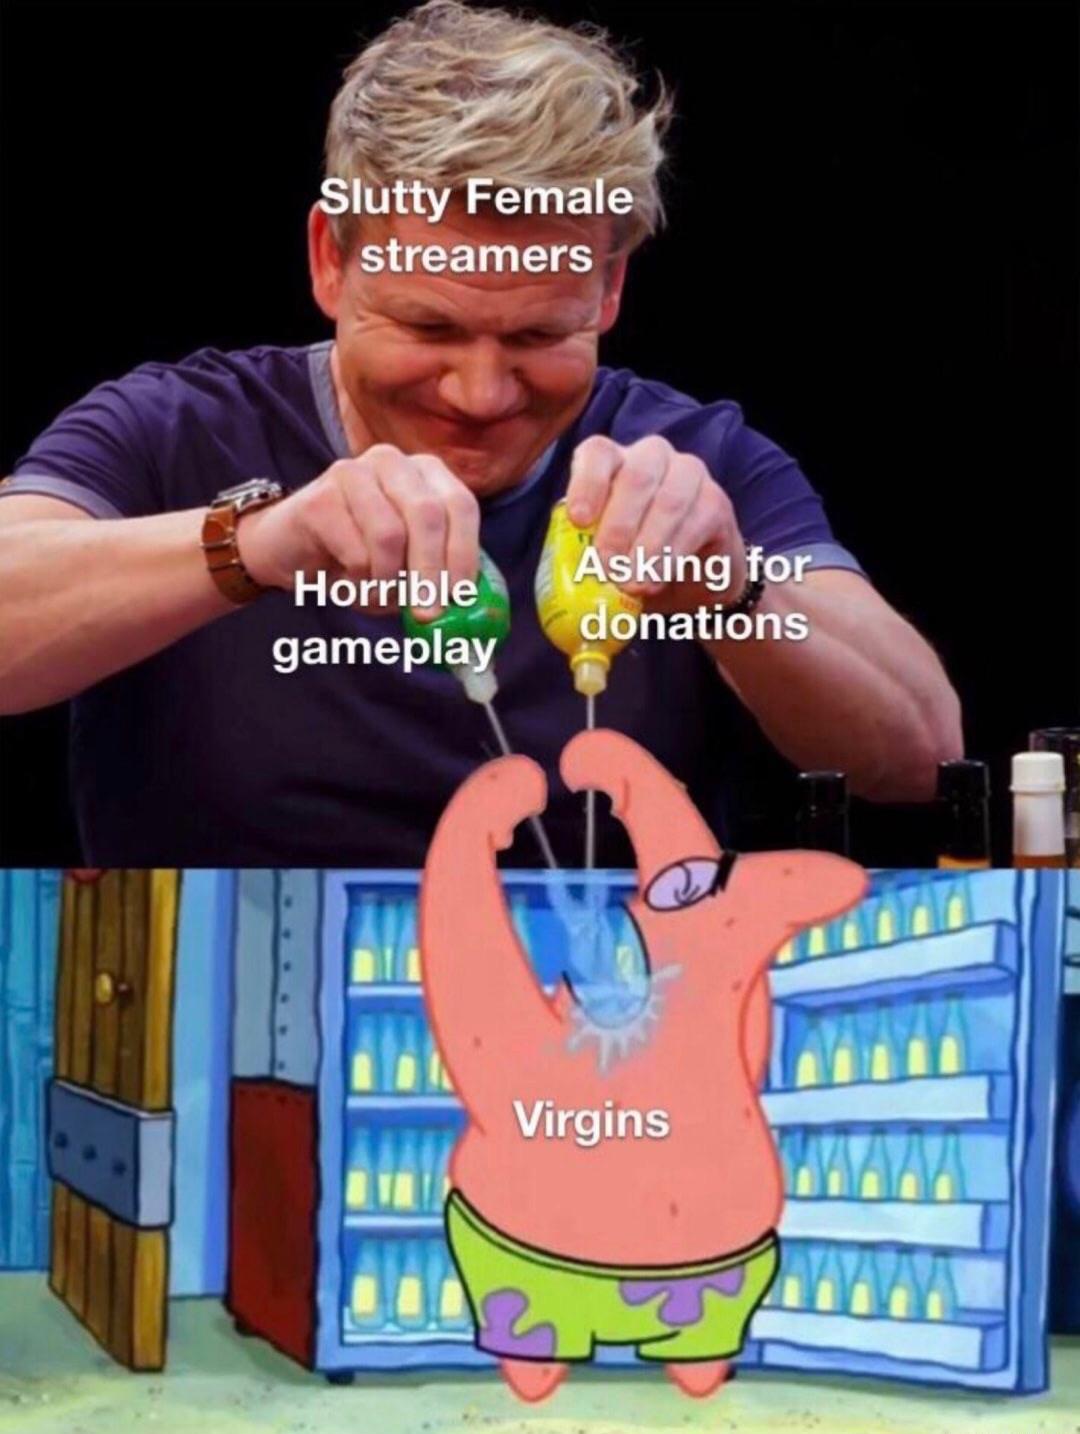 patrick meme - Slutty Female streamers Horrible gameplay Asking for donations Virgins